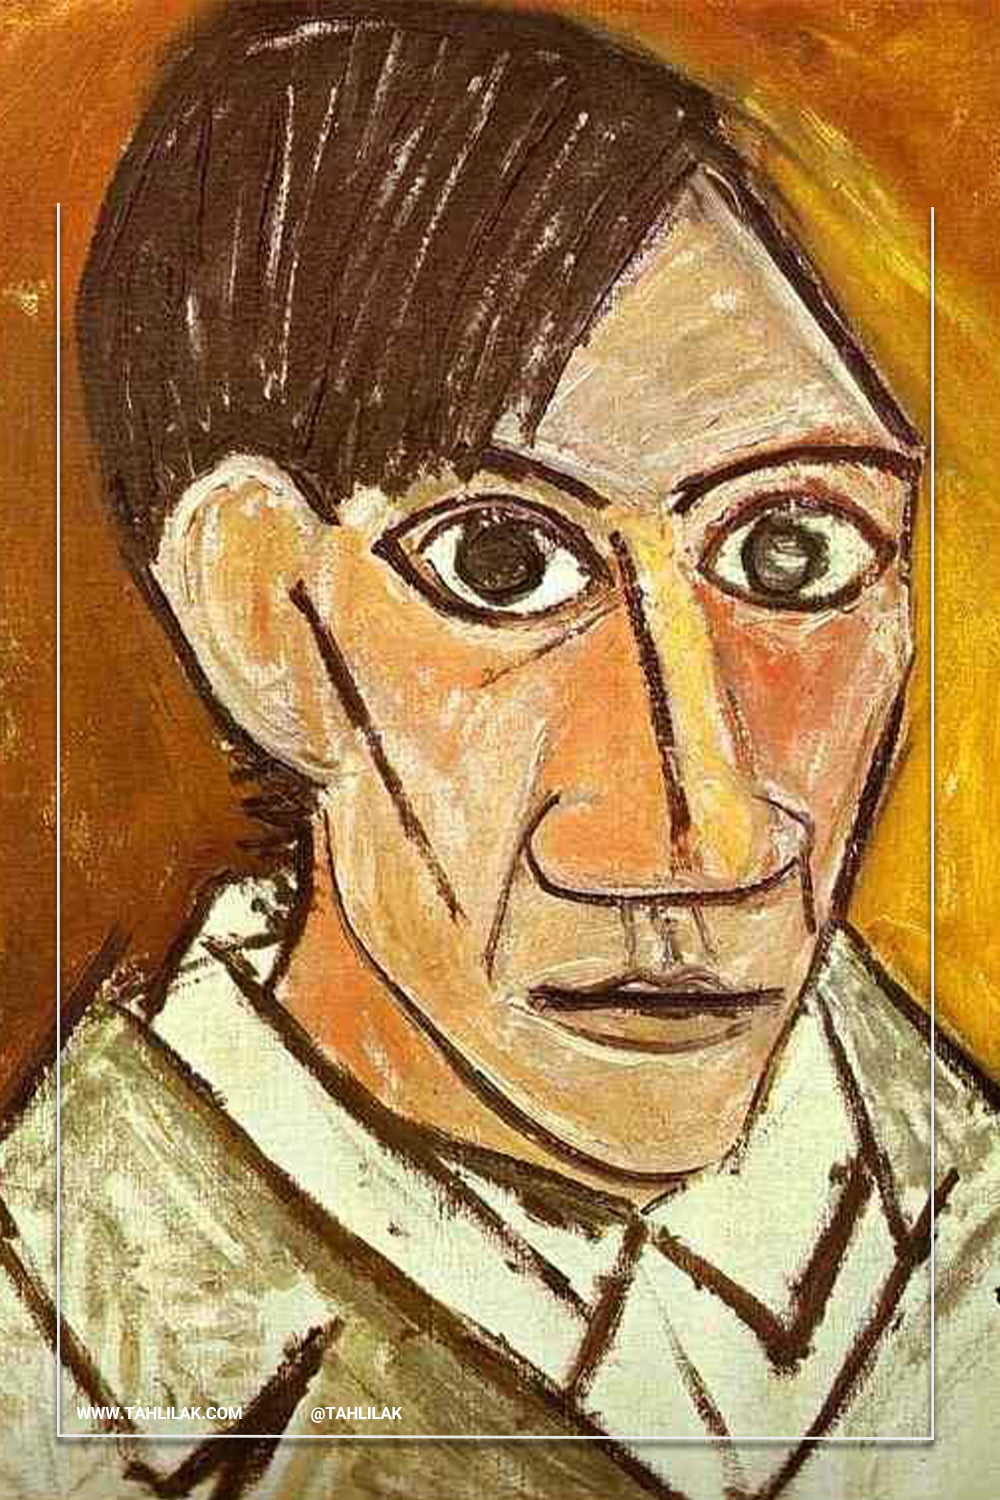 پابلو پیکاسو (Pablo Picasso) هنرمند صاحب سبک و استاد برجسته جنبش کوبیسم